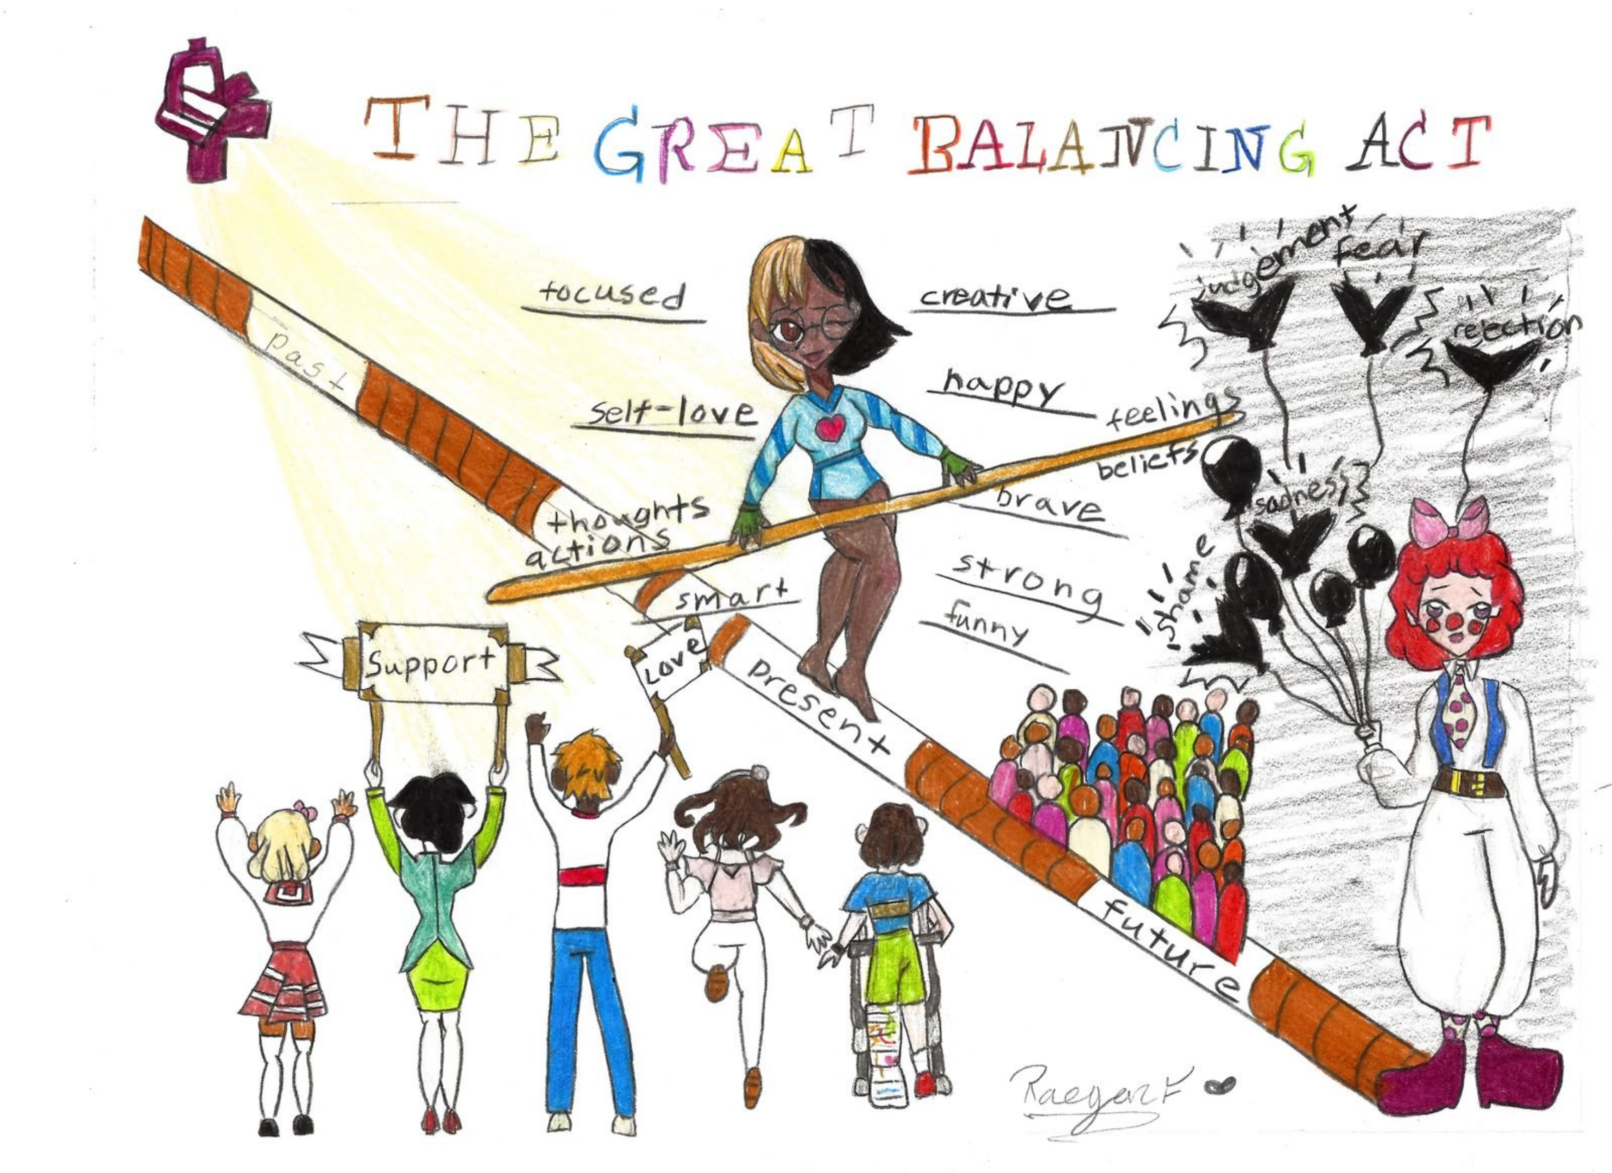 The Great Balancing Act  Texas Mental Health Creative Arts Contest